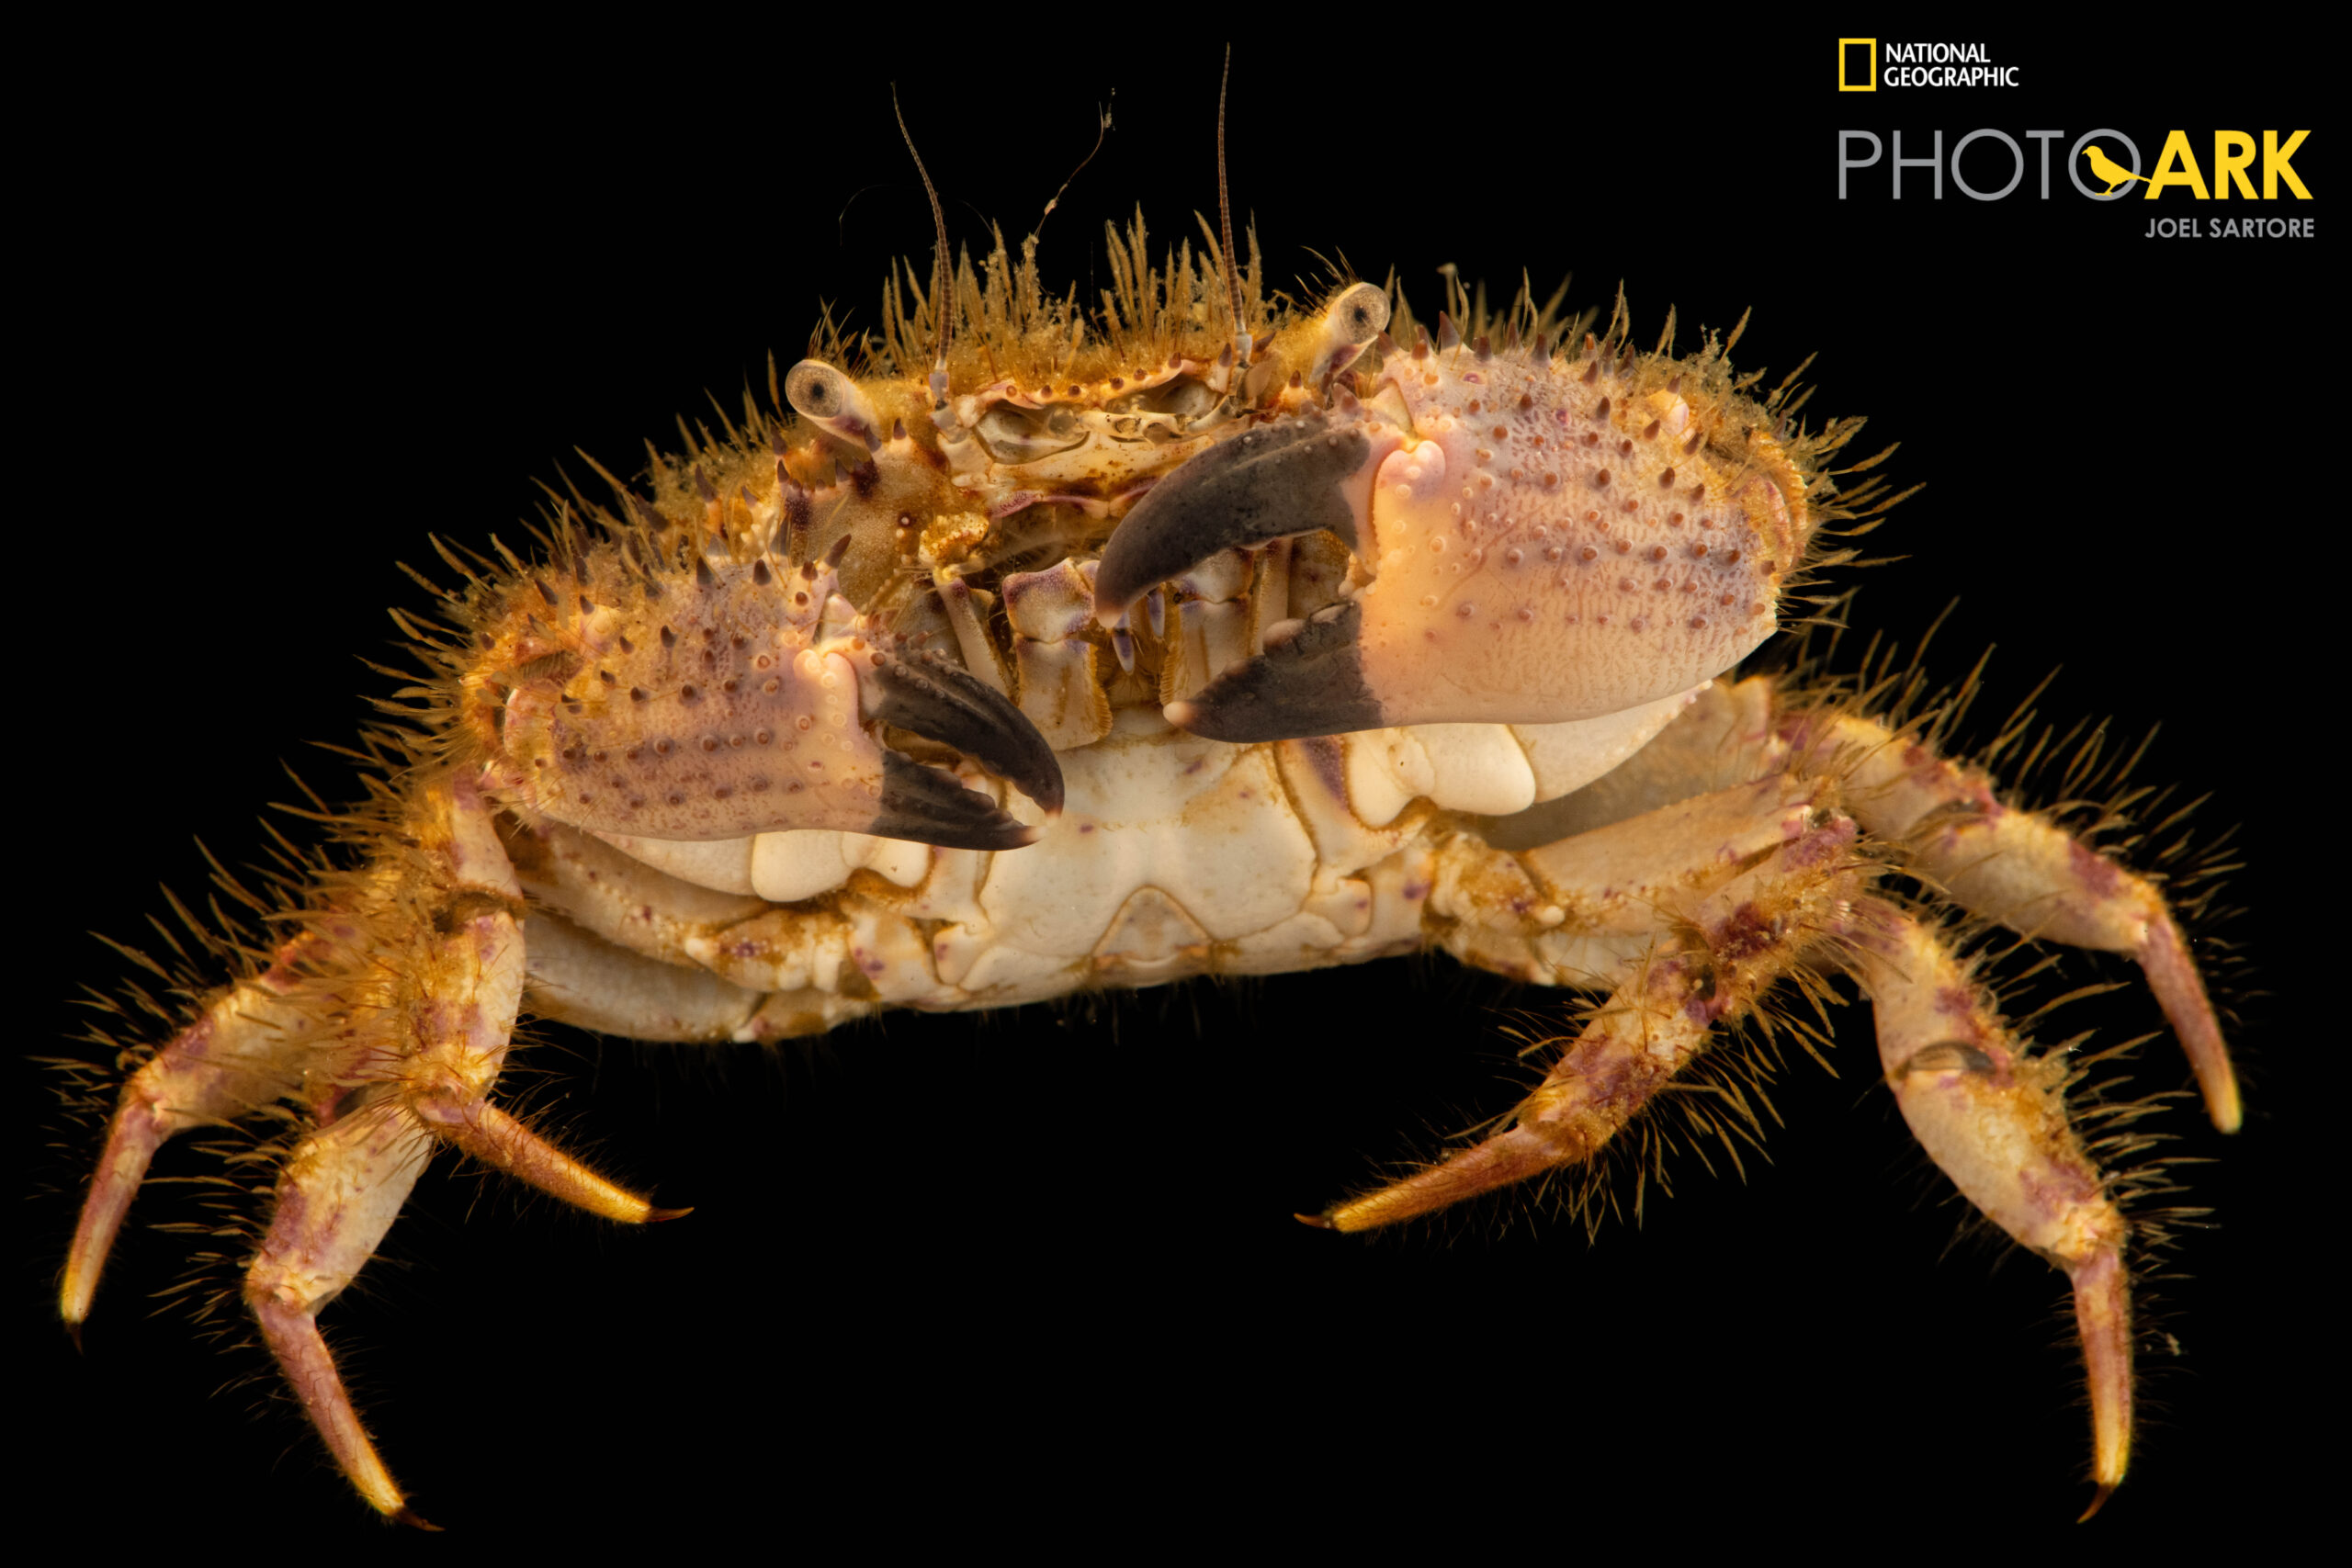 A hairy crab (Pilumnus sayi) at Gulf Specimen in Panacea, Florida.